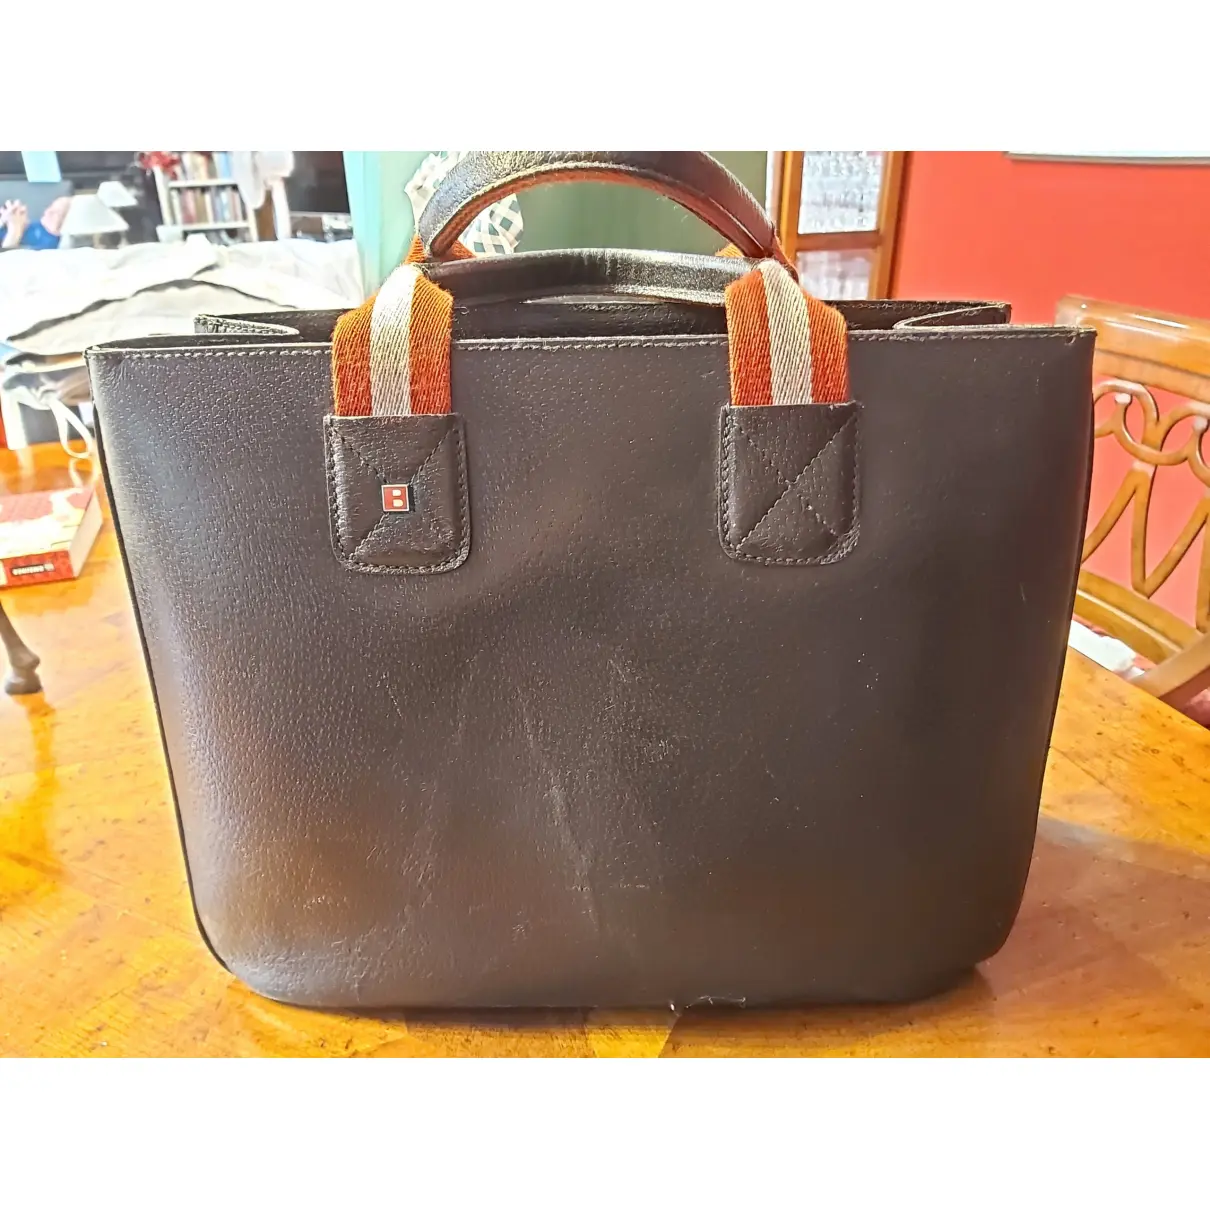 Buy Bally Leather satchel online